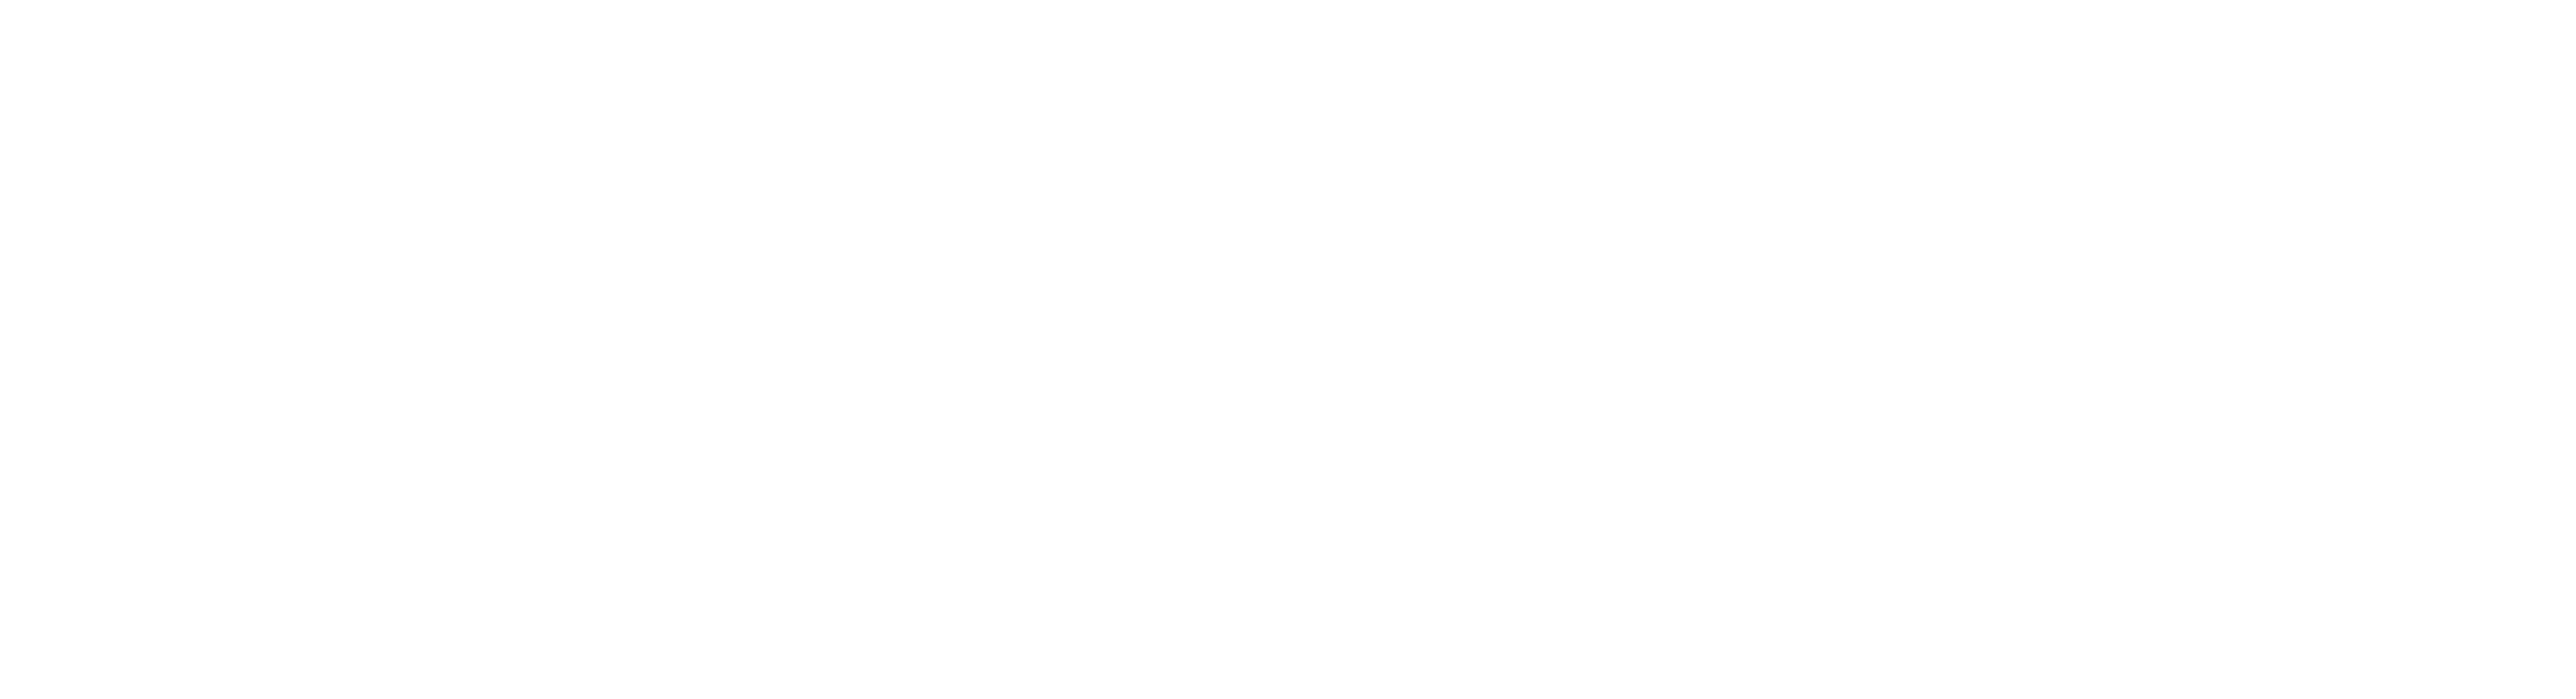 'HyperHEP B' logo